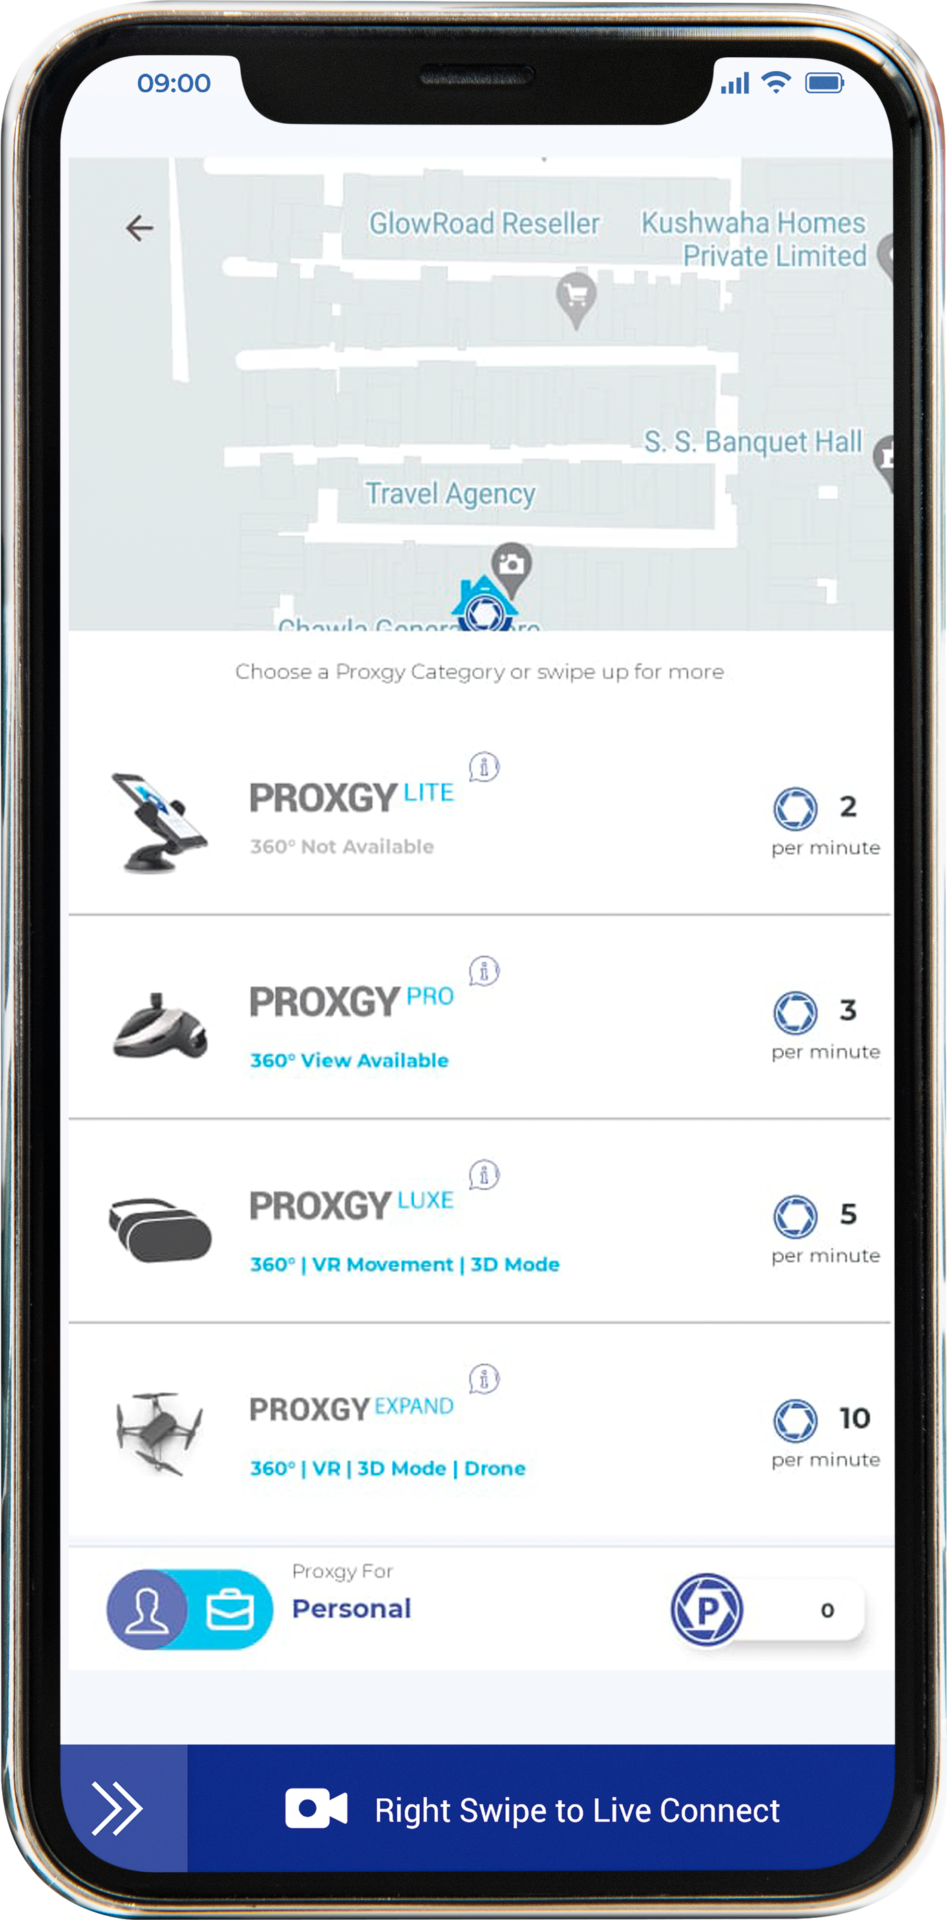 Proxgy App enables Live